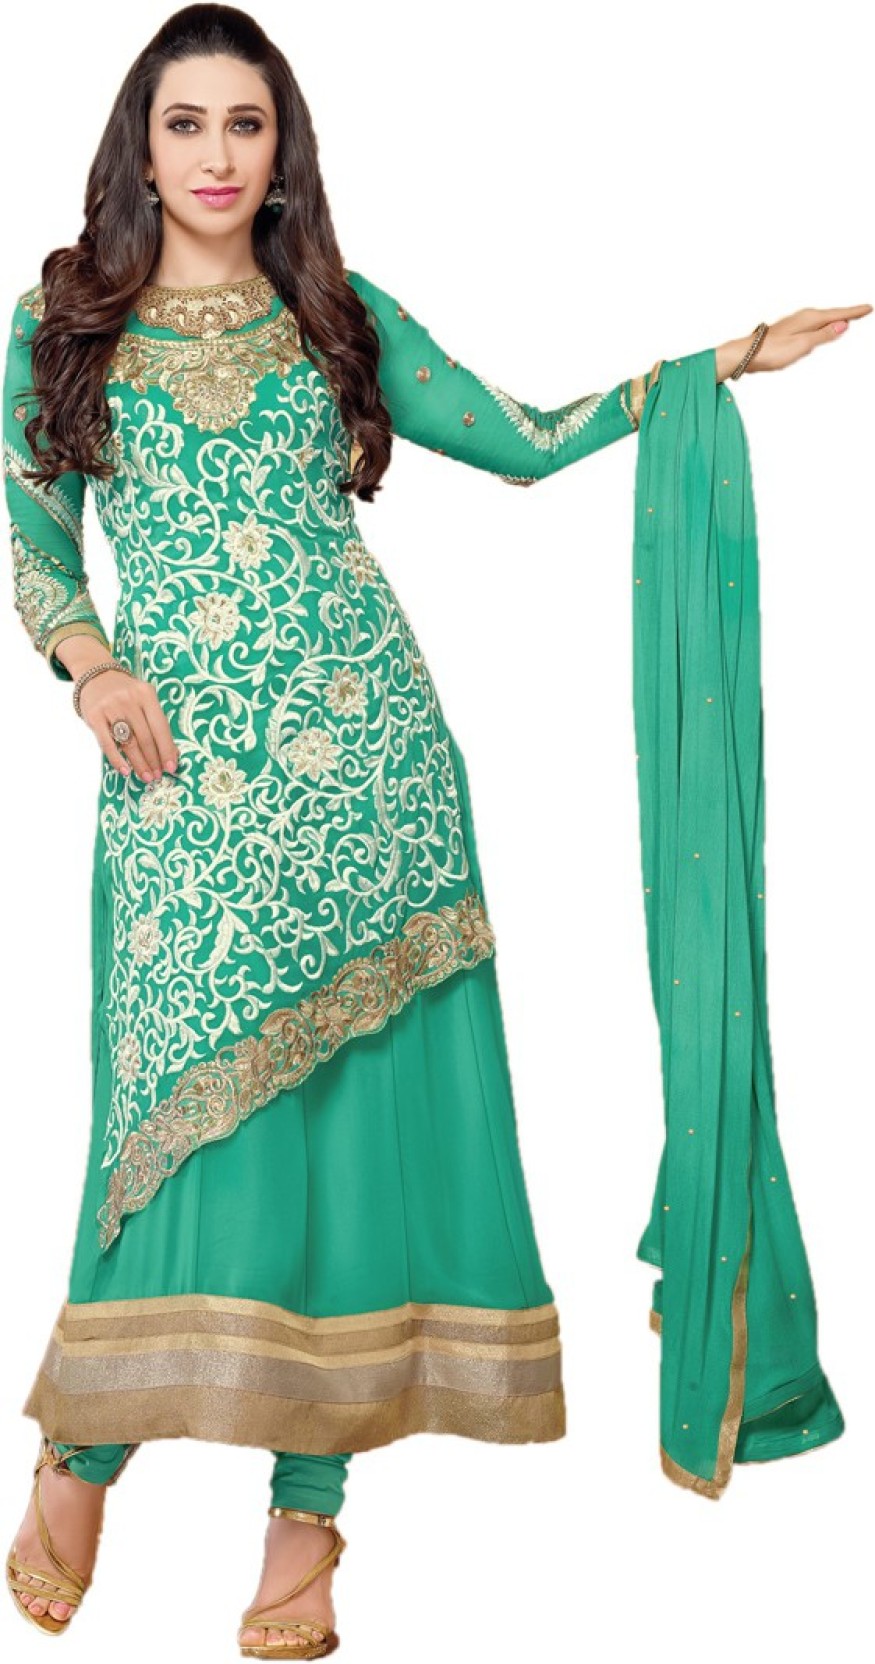 Party Wear Dresses Georgette Self Design Semi-stitched Salwar Suit Dupatta Material Price in 